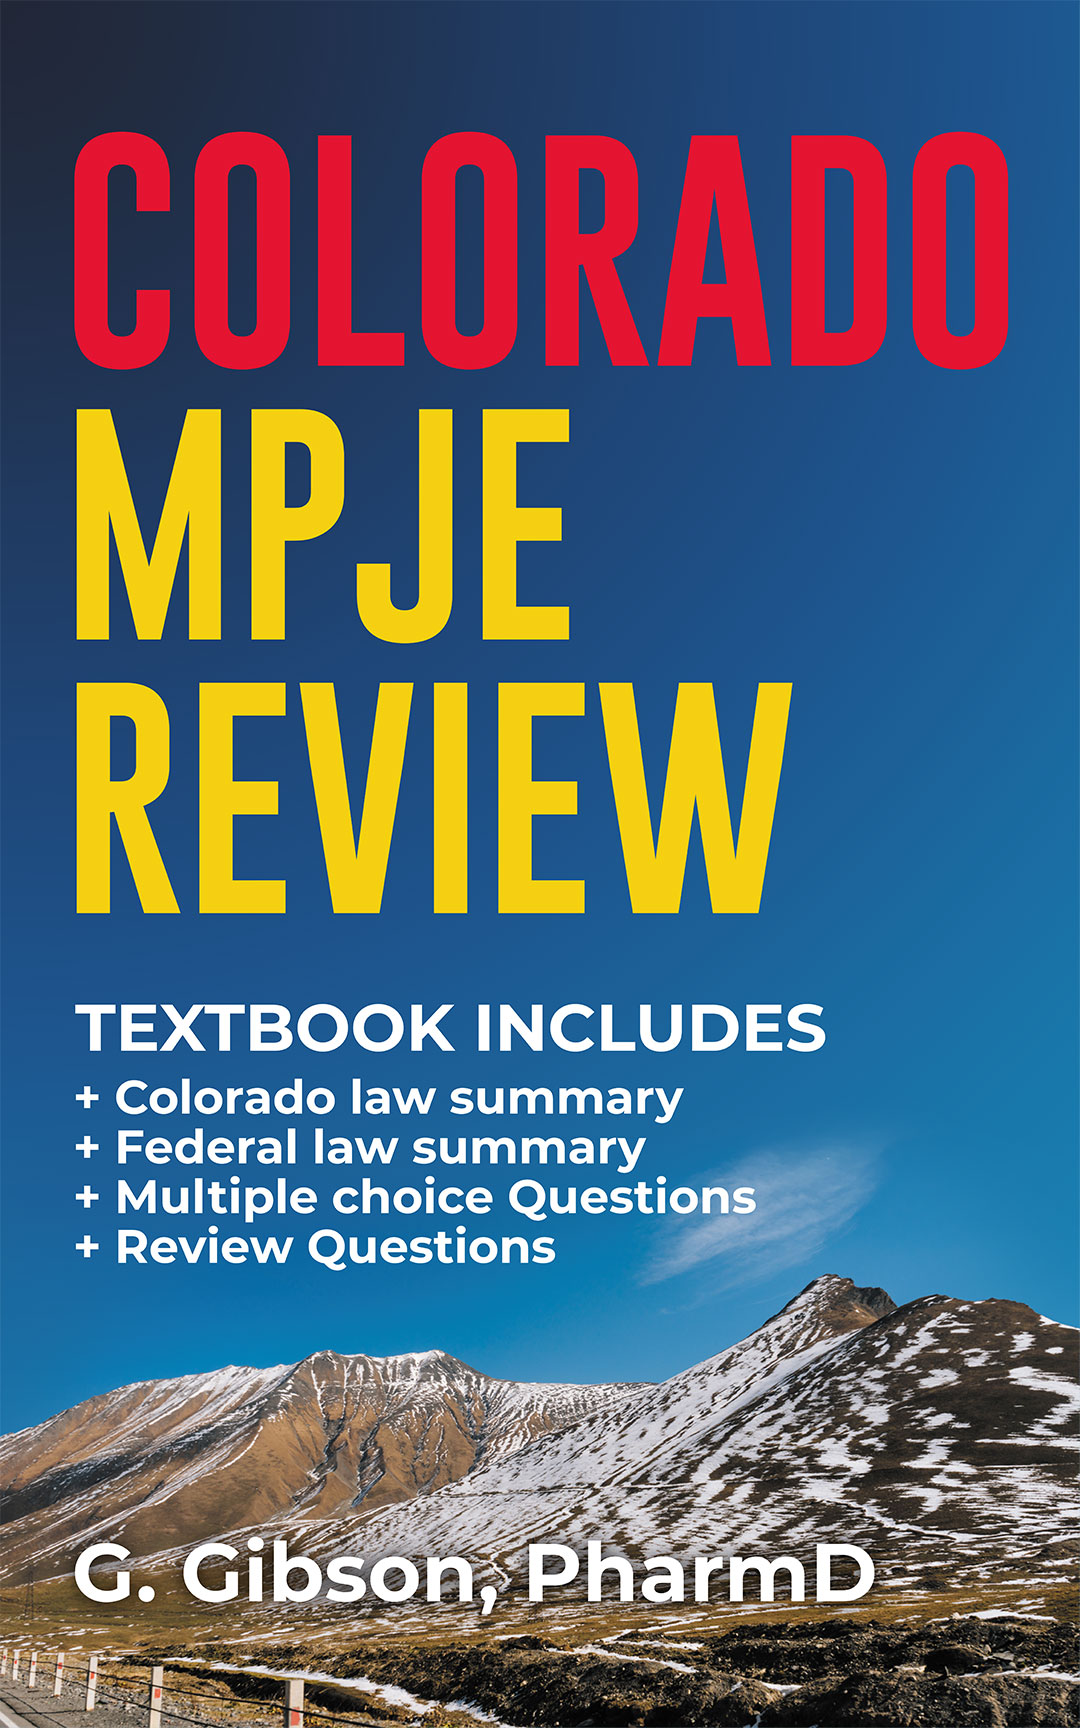 Colorado MPJE Review